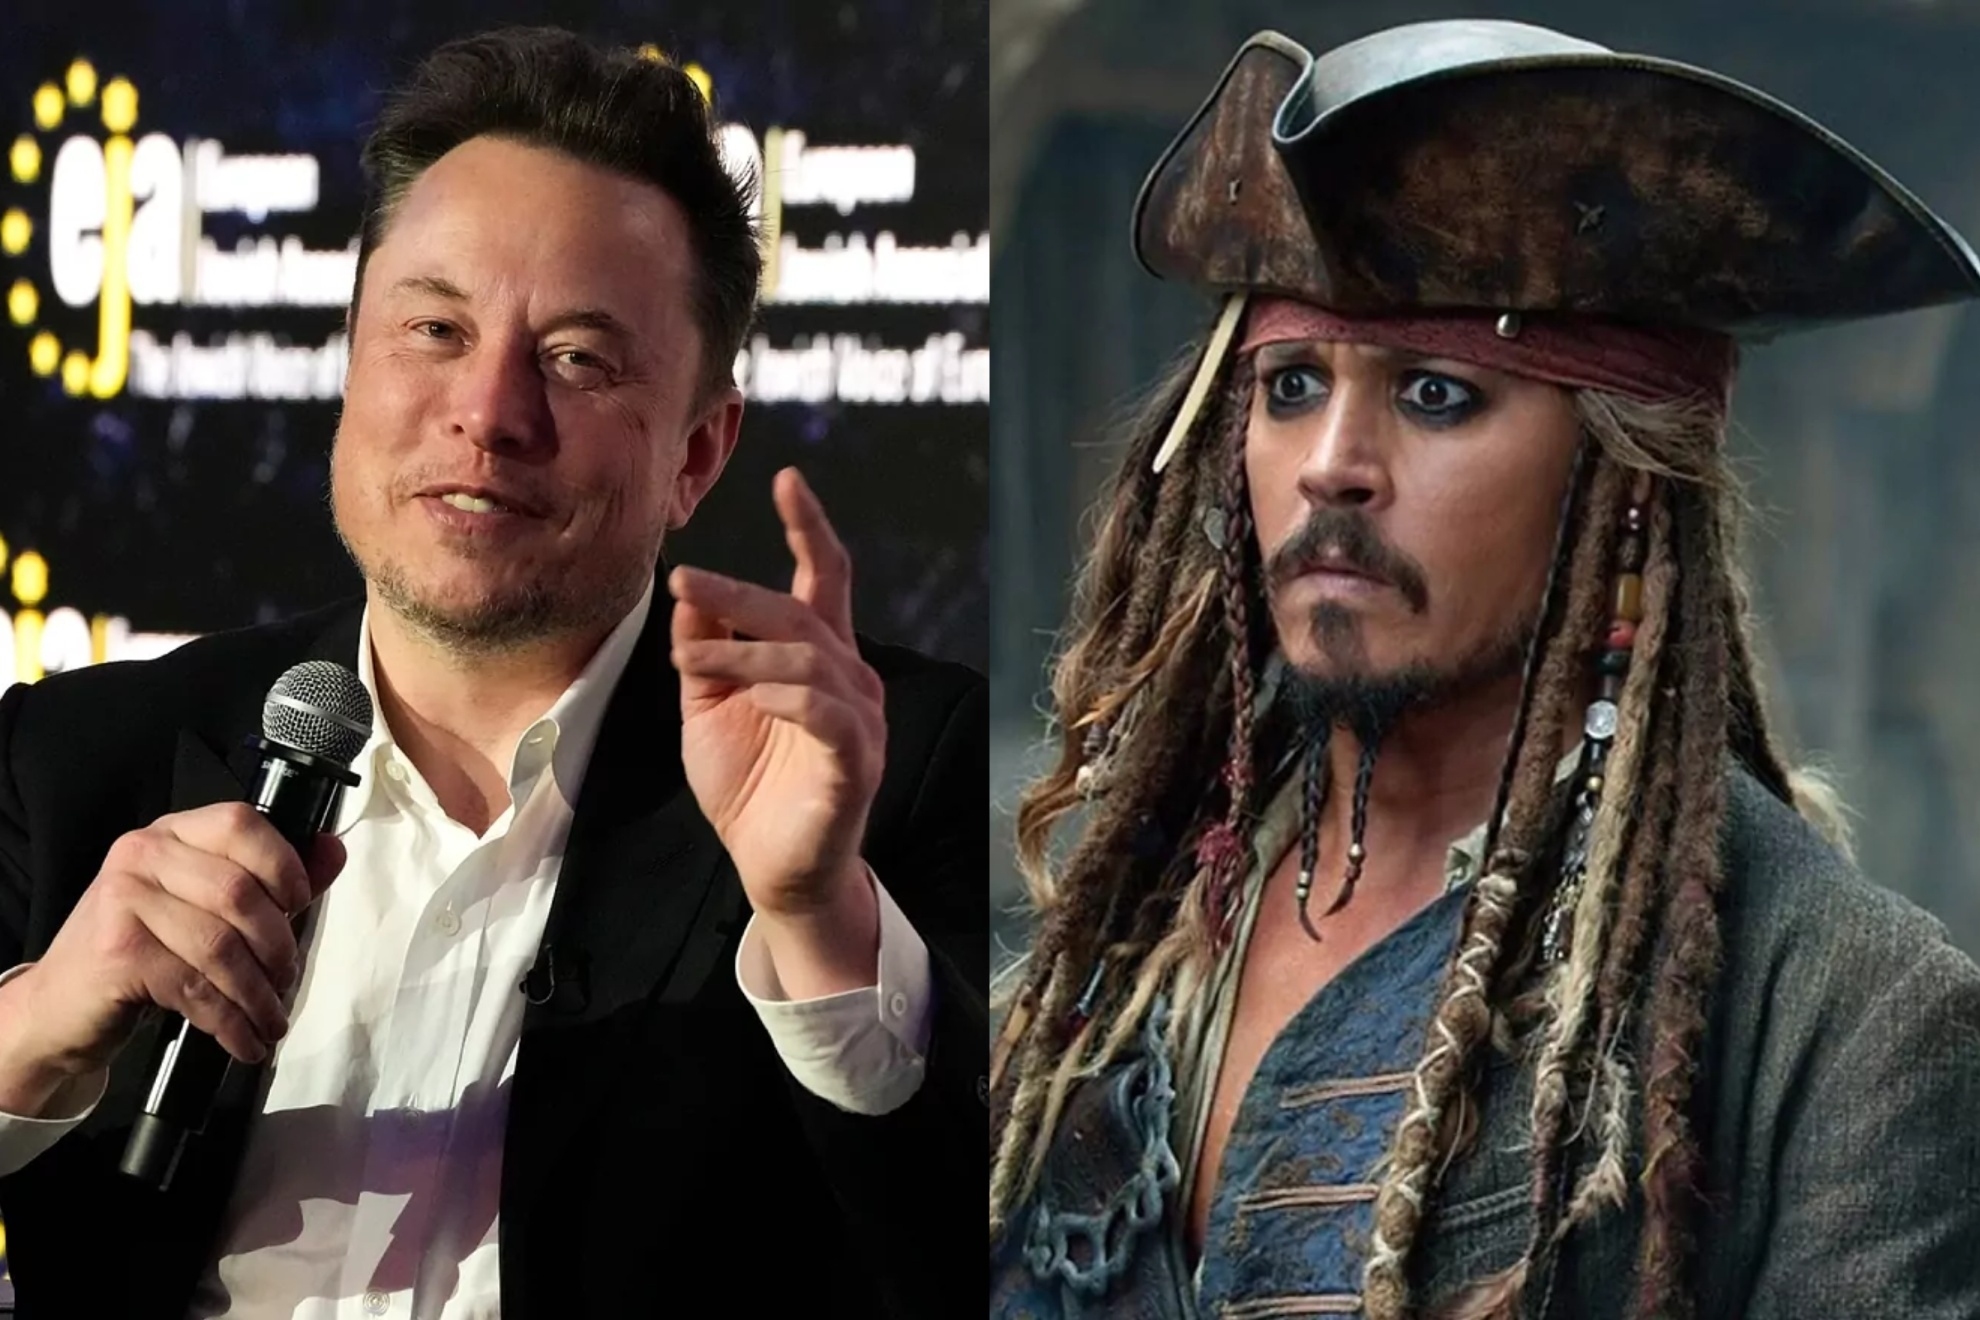 Mashup image of Elon Musk and Johnny Depp